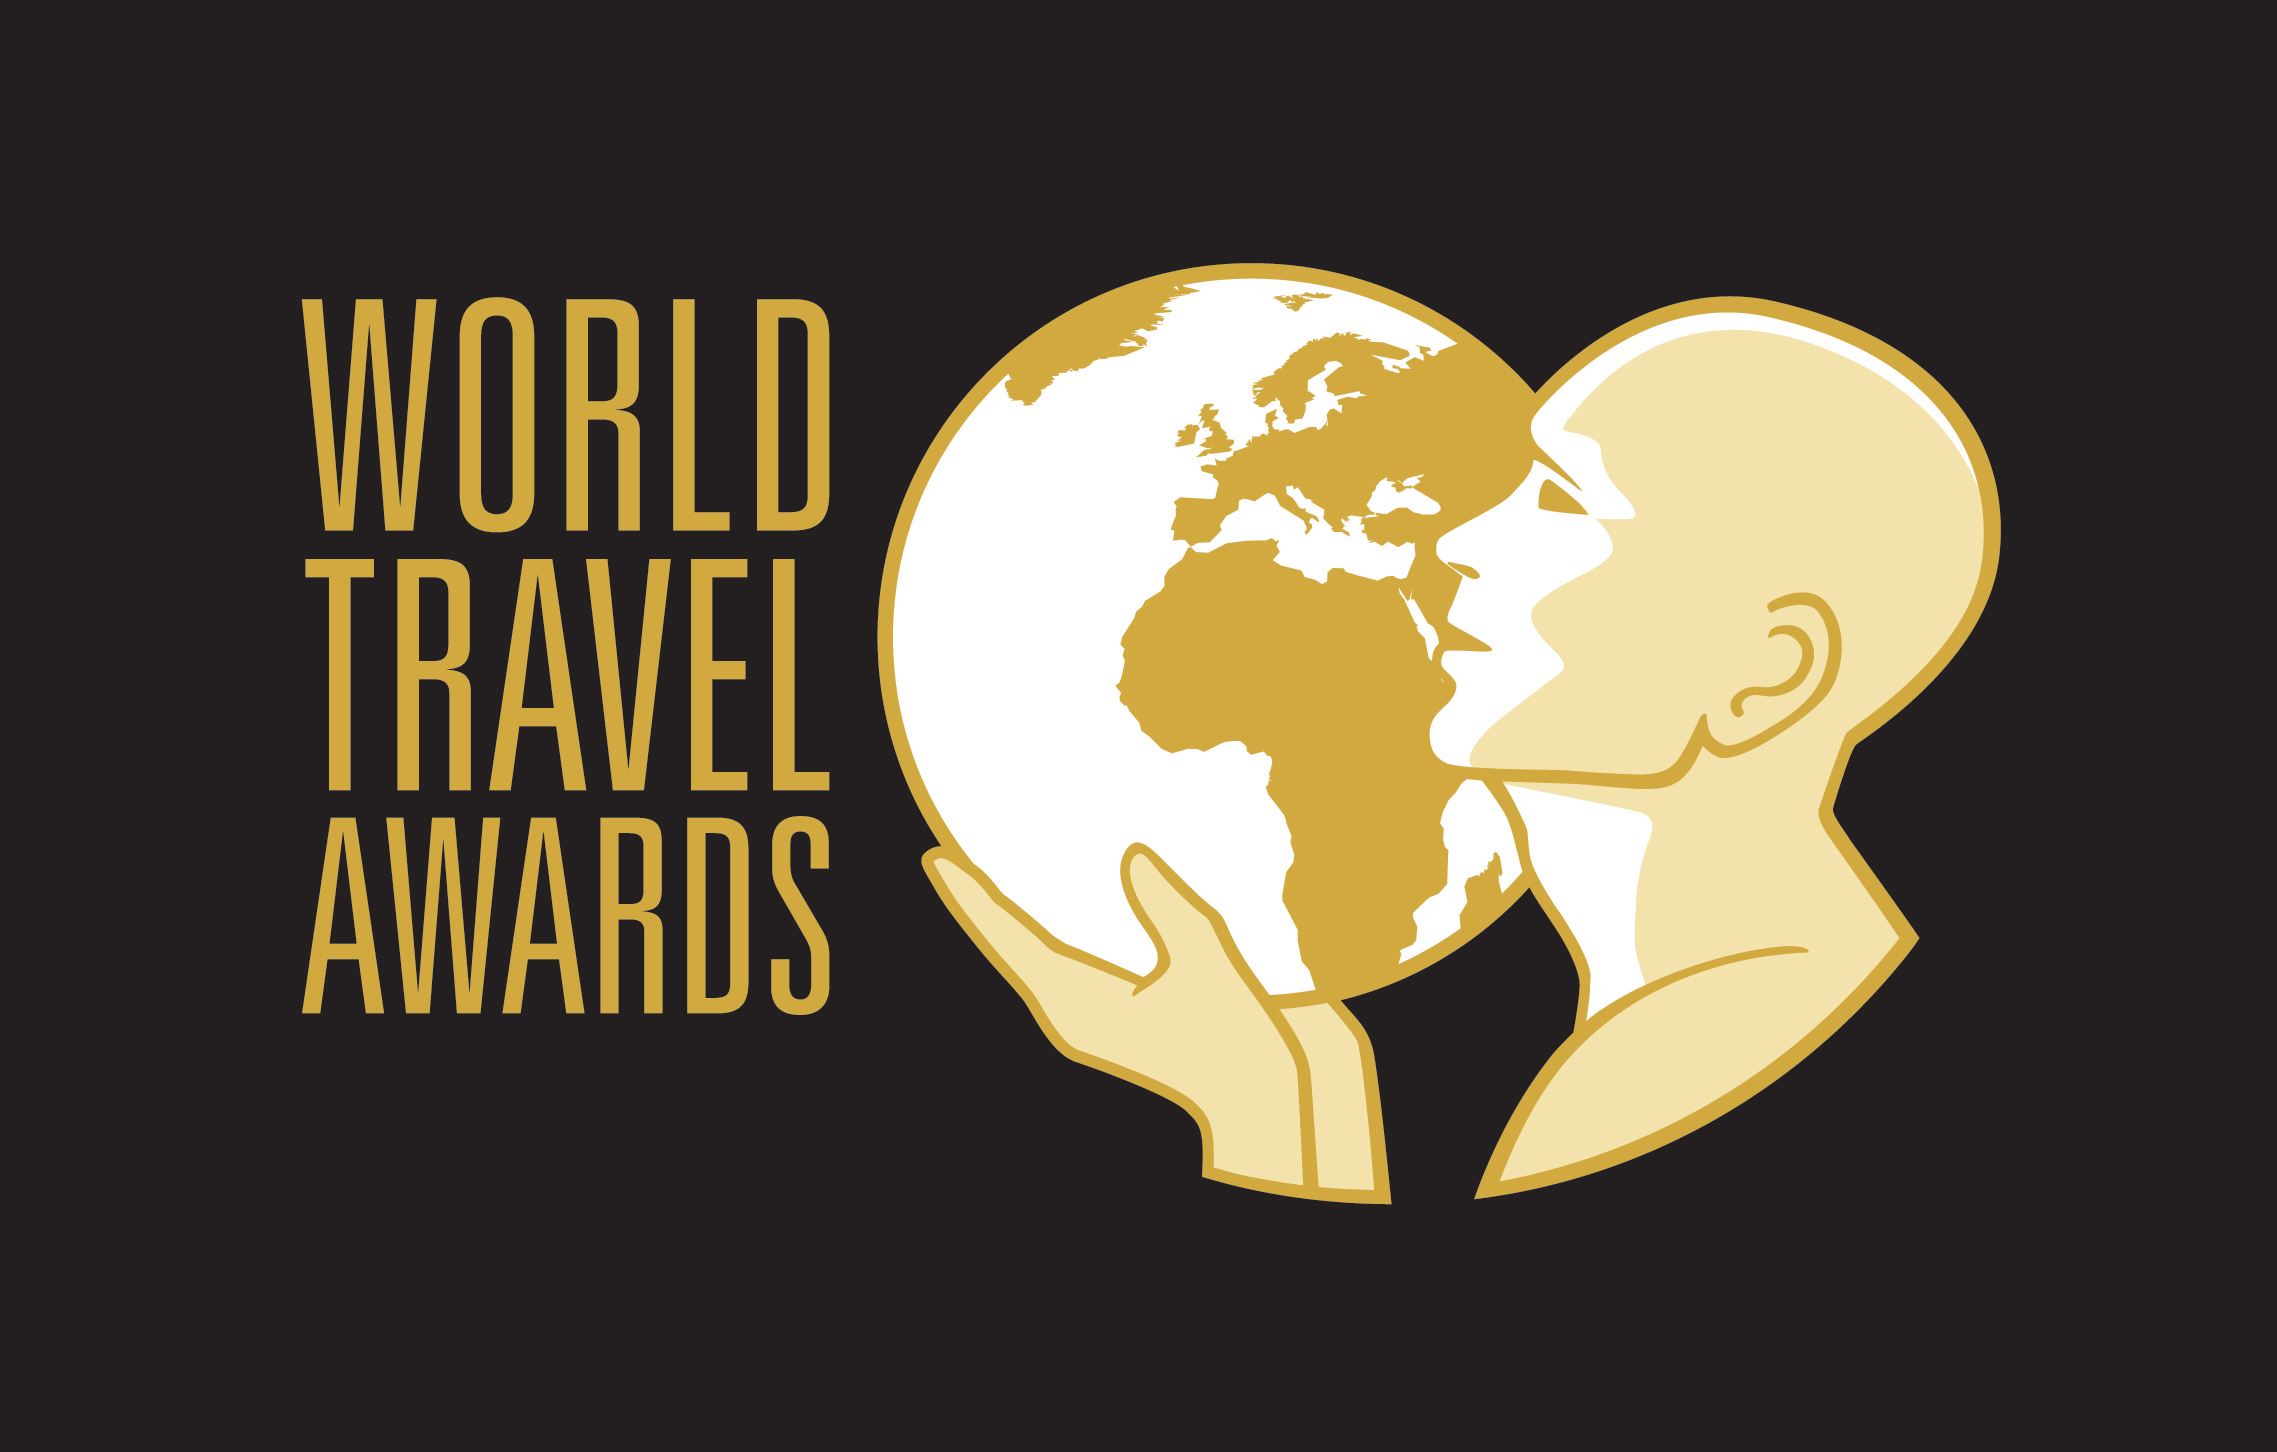 The World Travel Awards